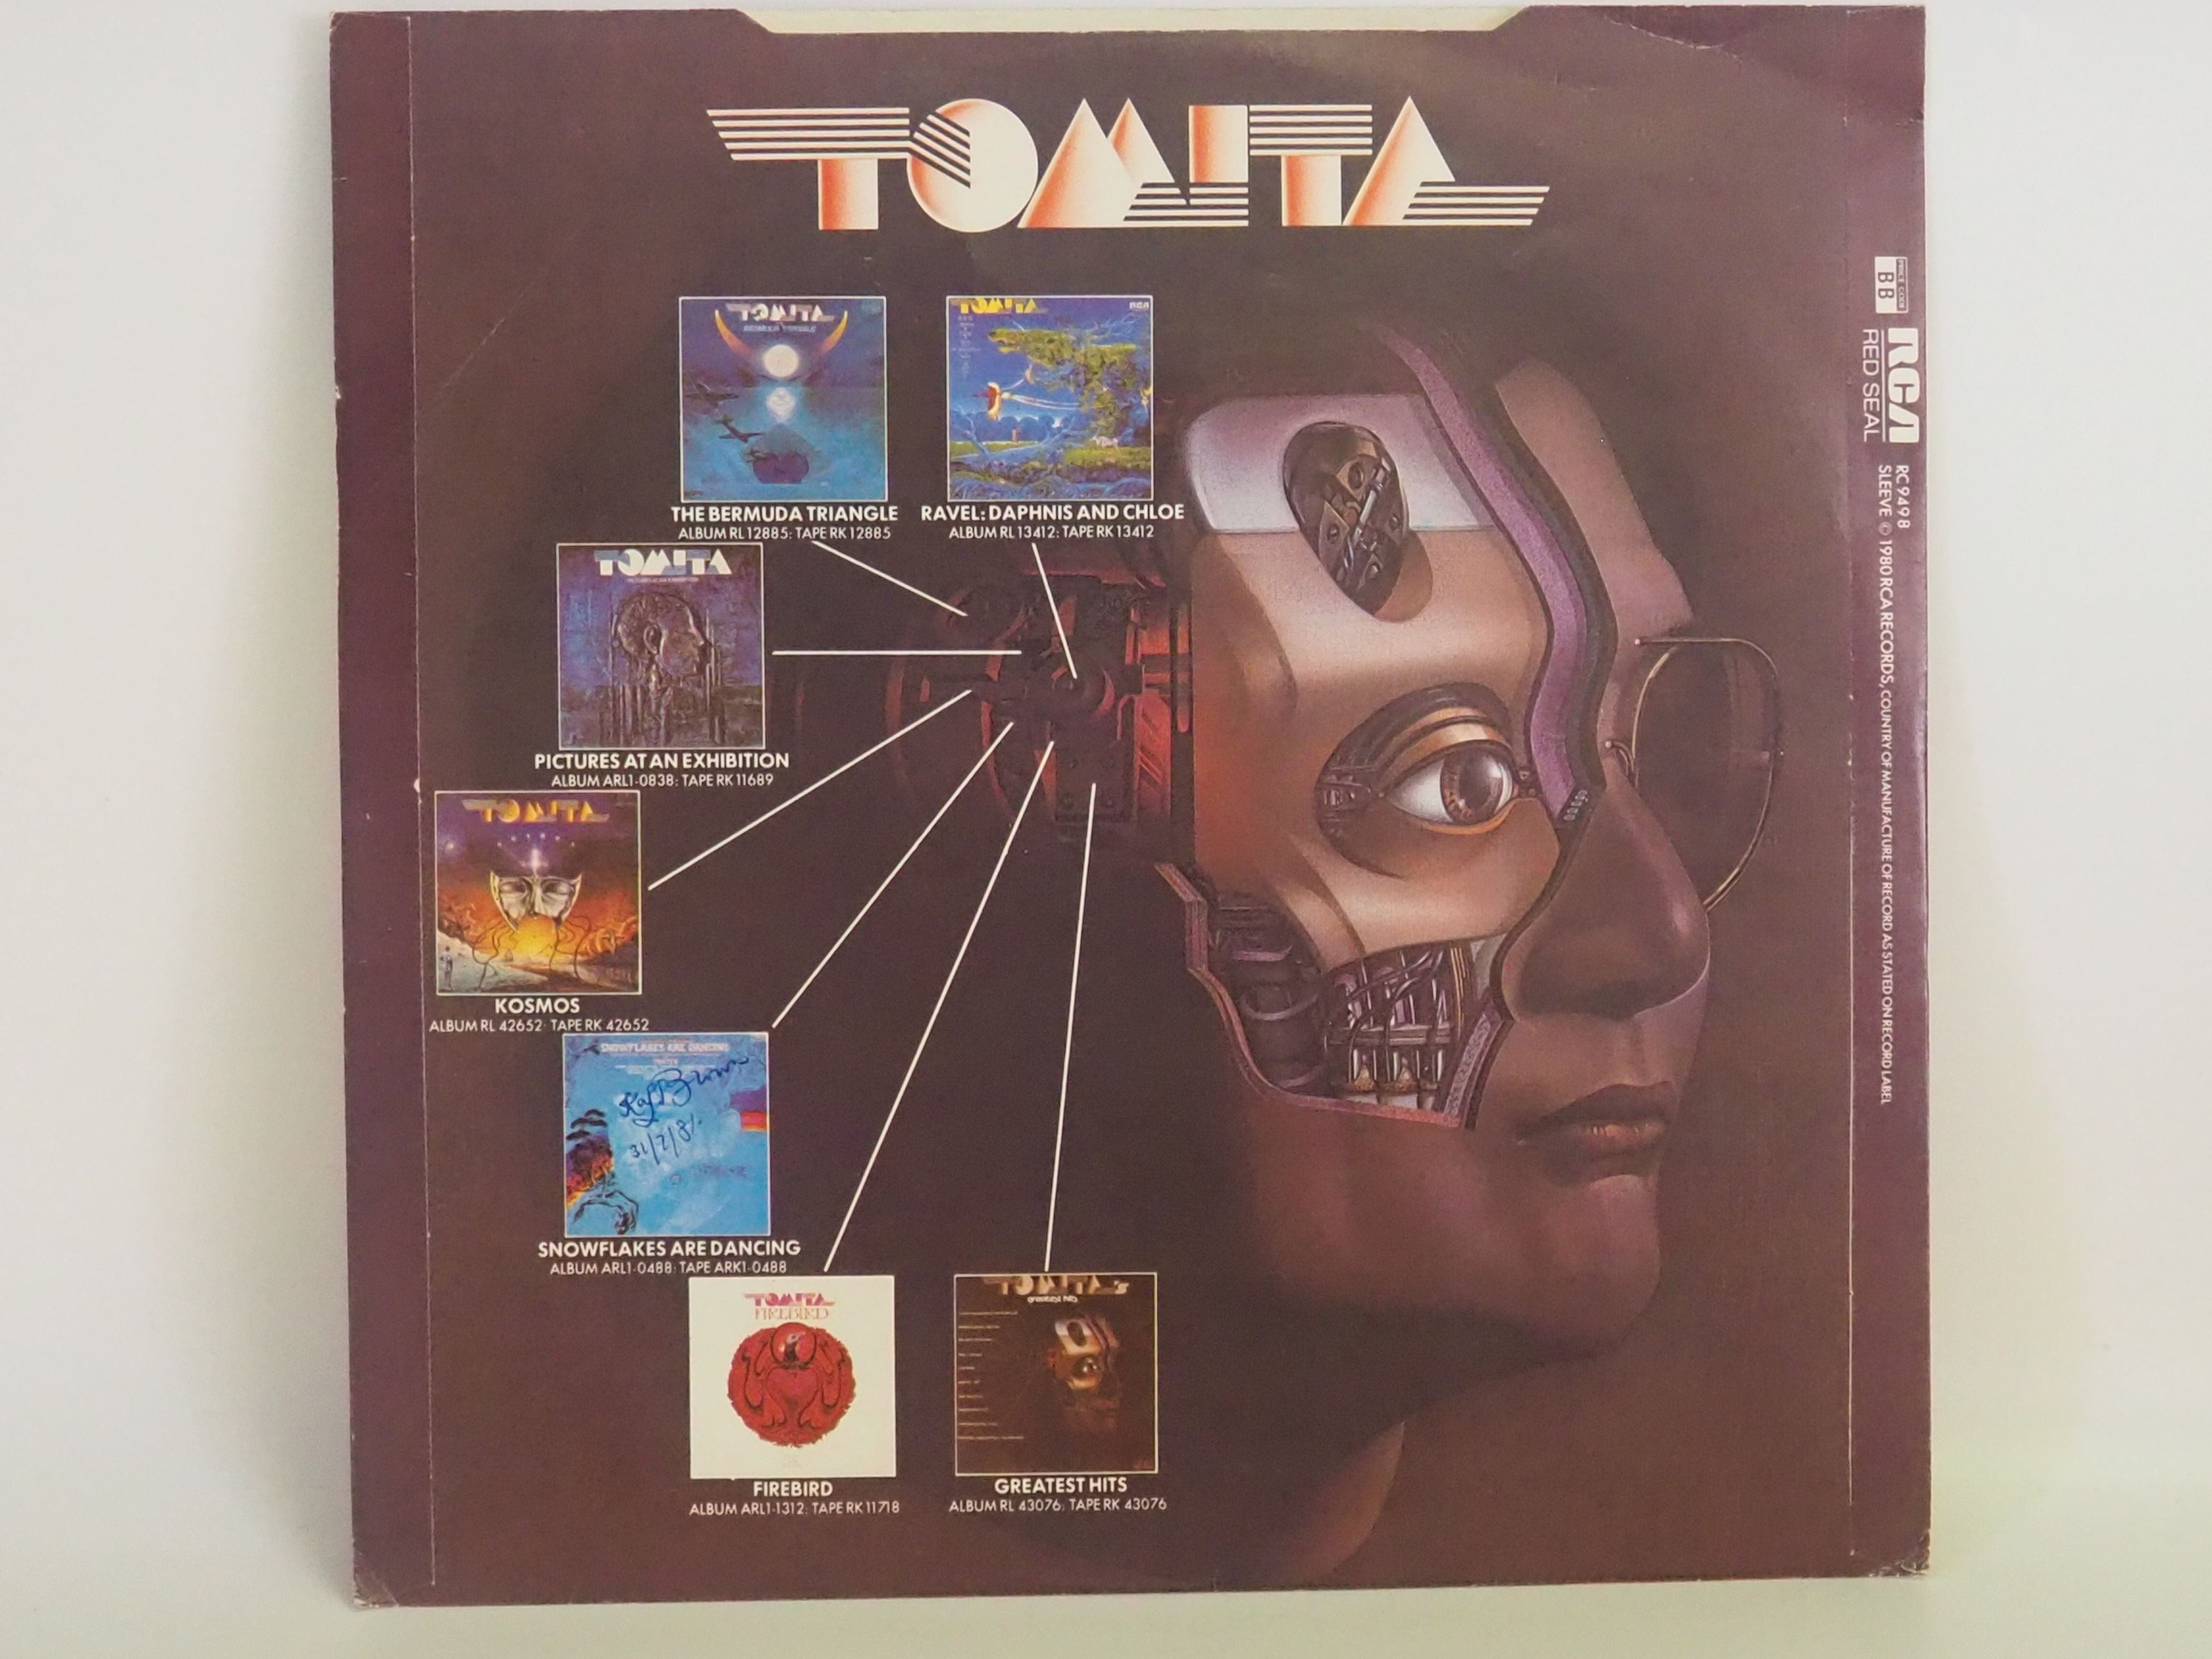 Tomita - Bolero 12" Single Vinyl - Image 3 of 3